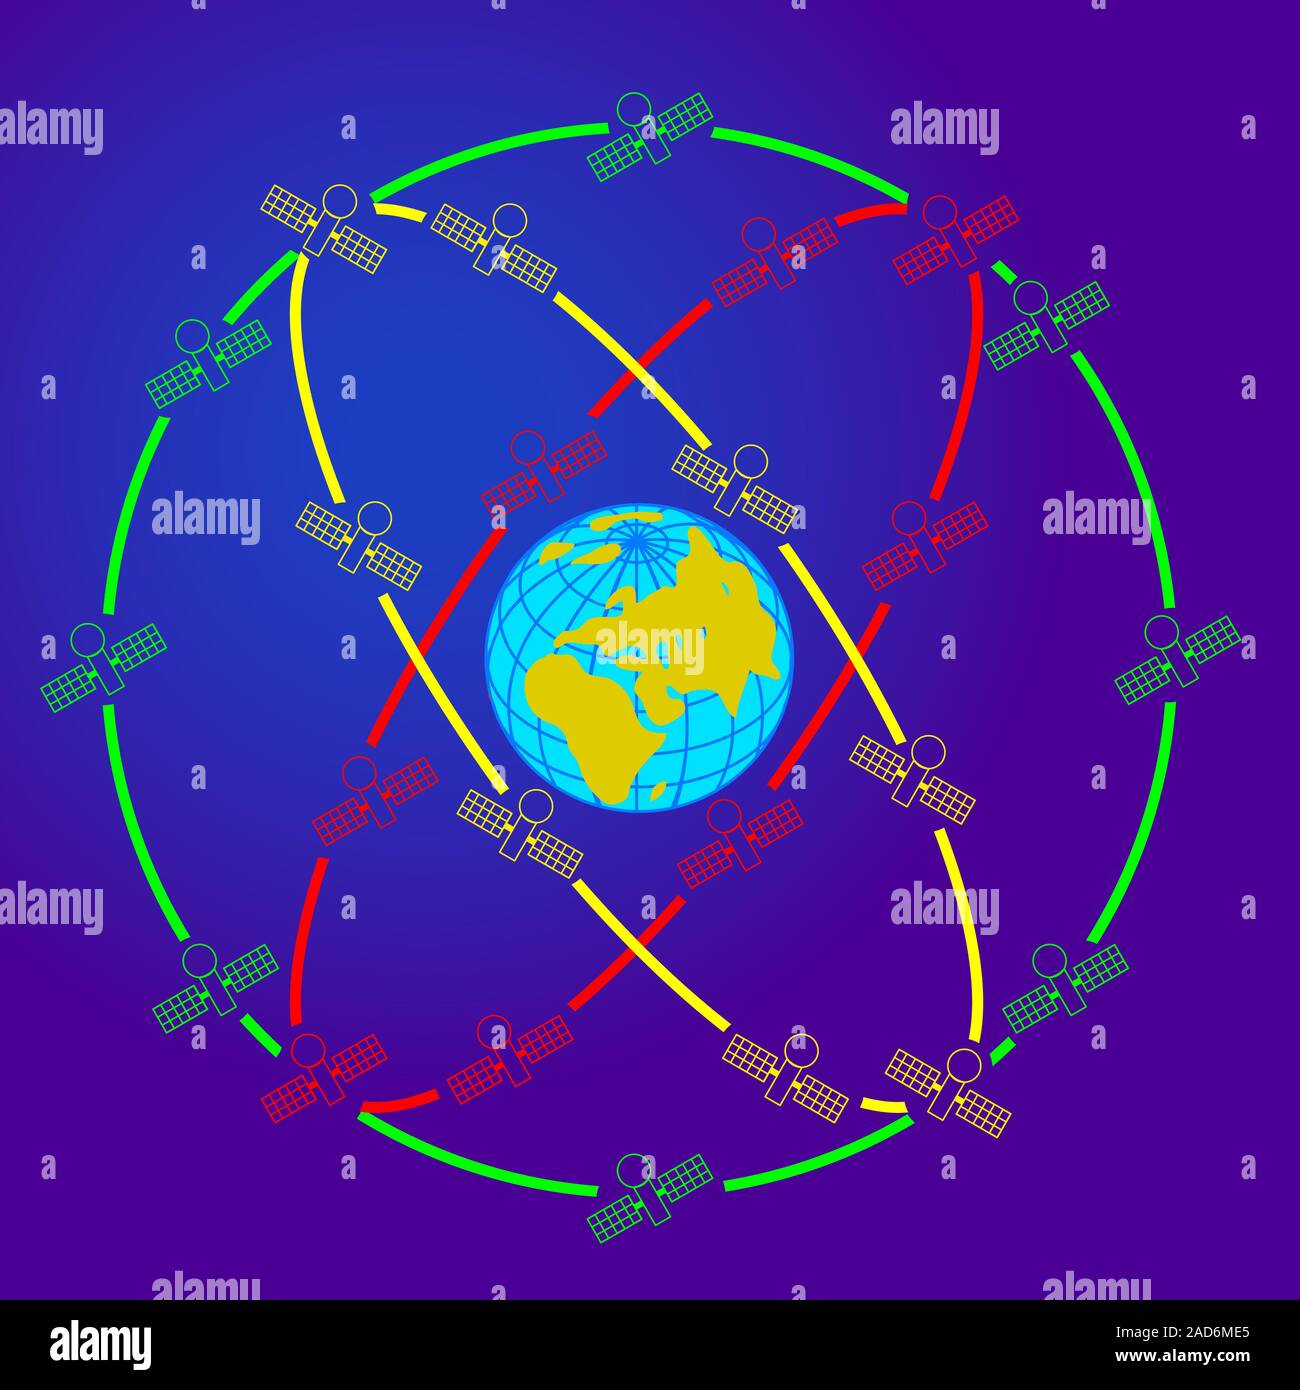 space satellites in eccentric orbits around the Earth. Stock Vector